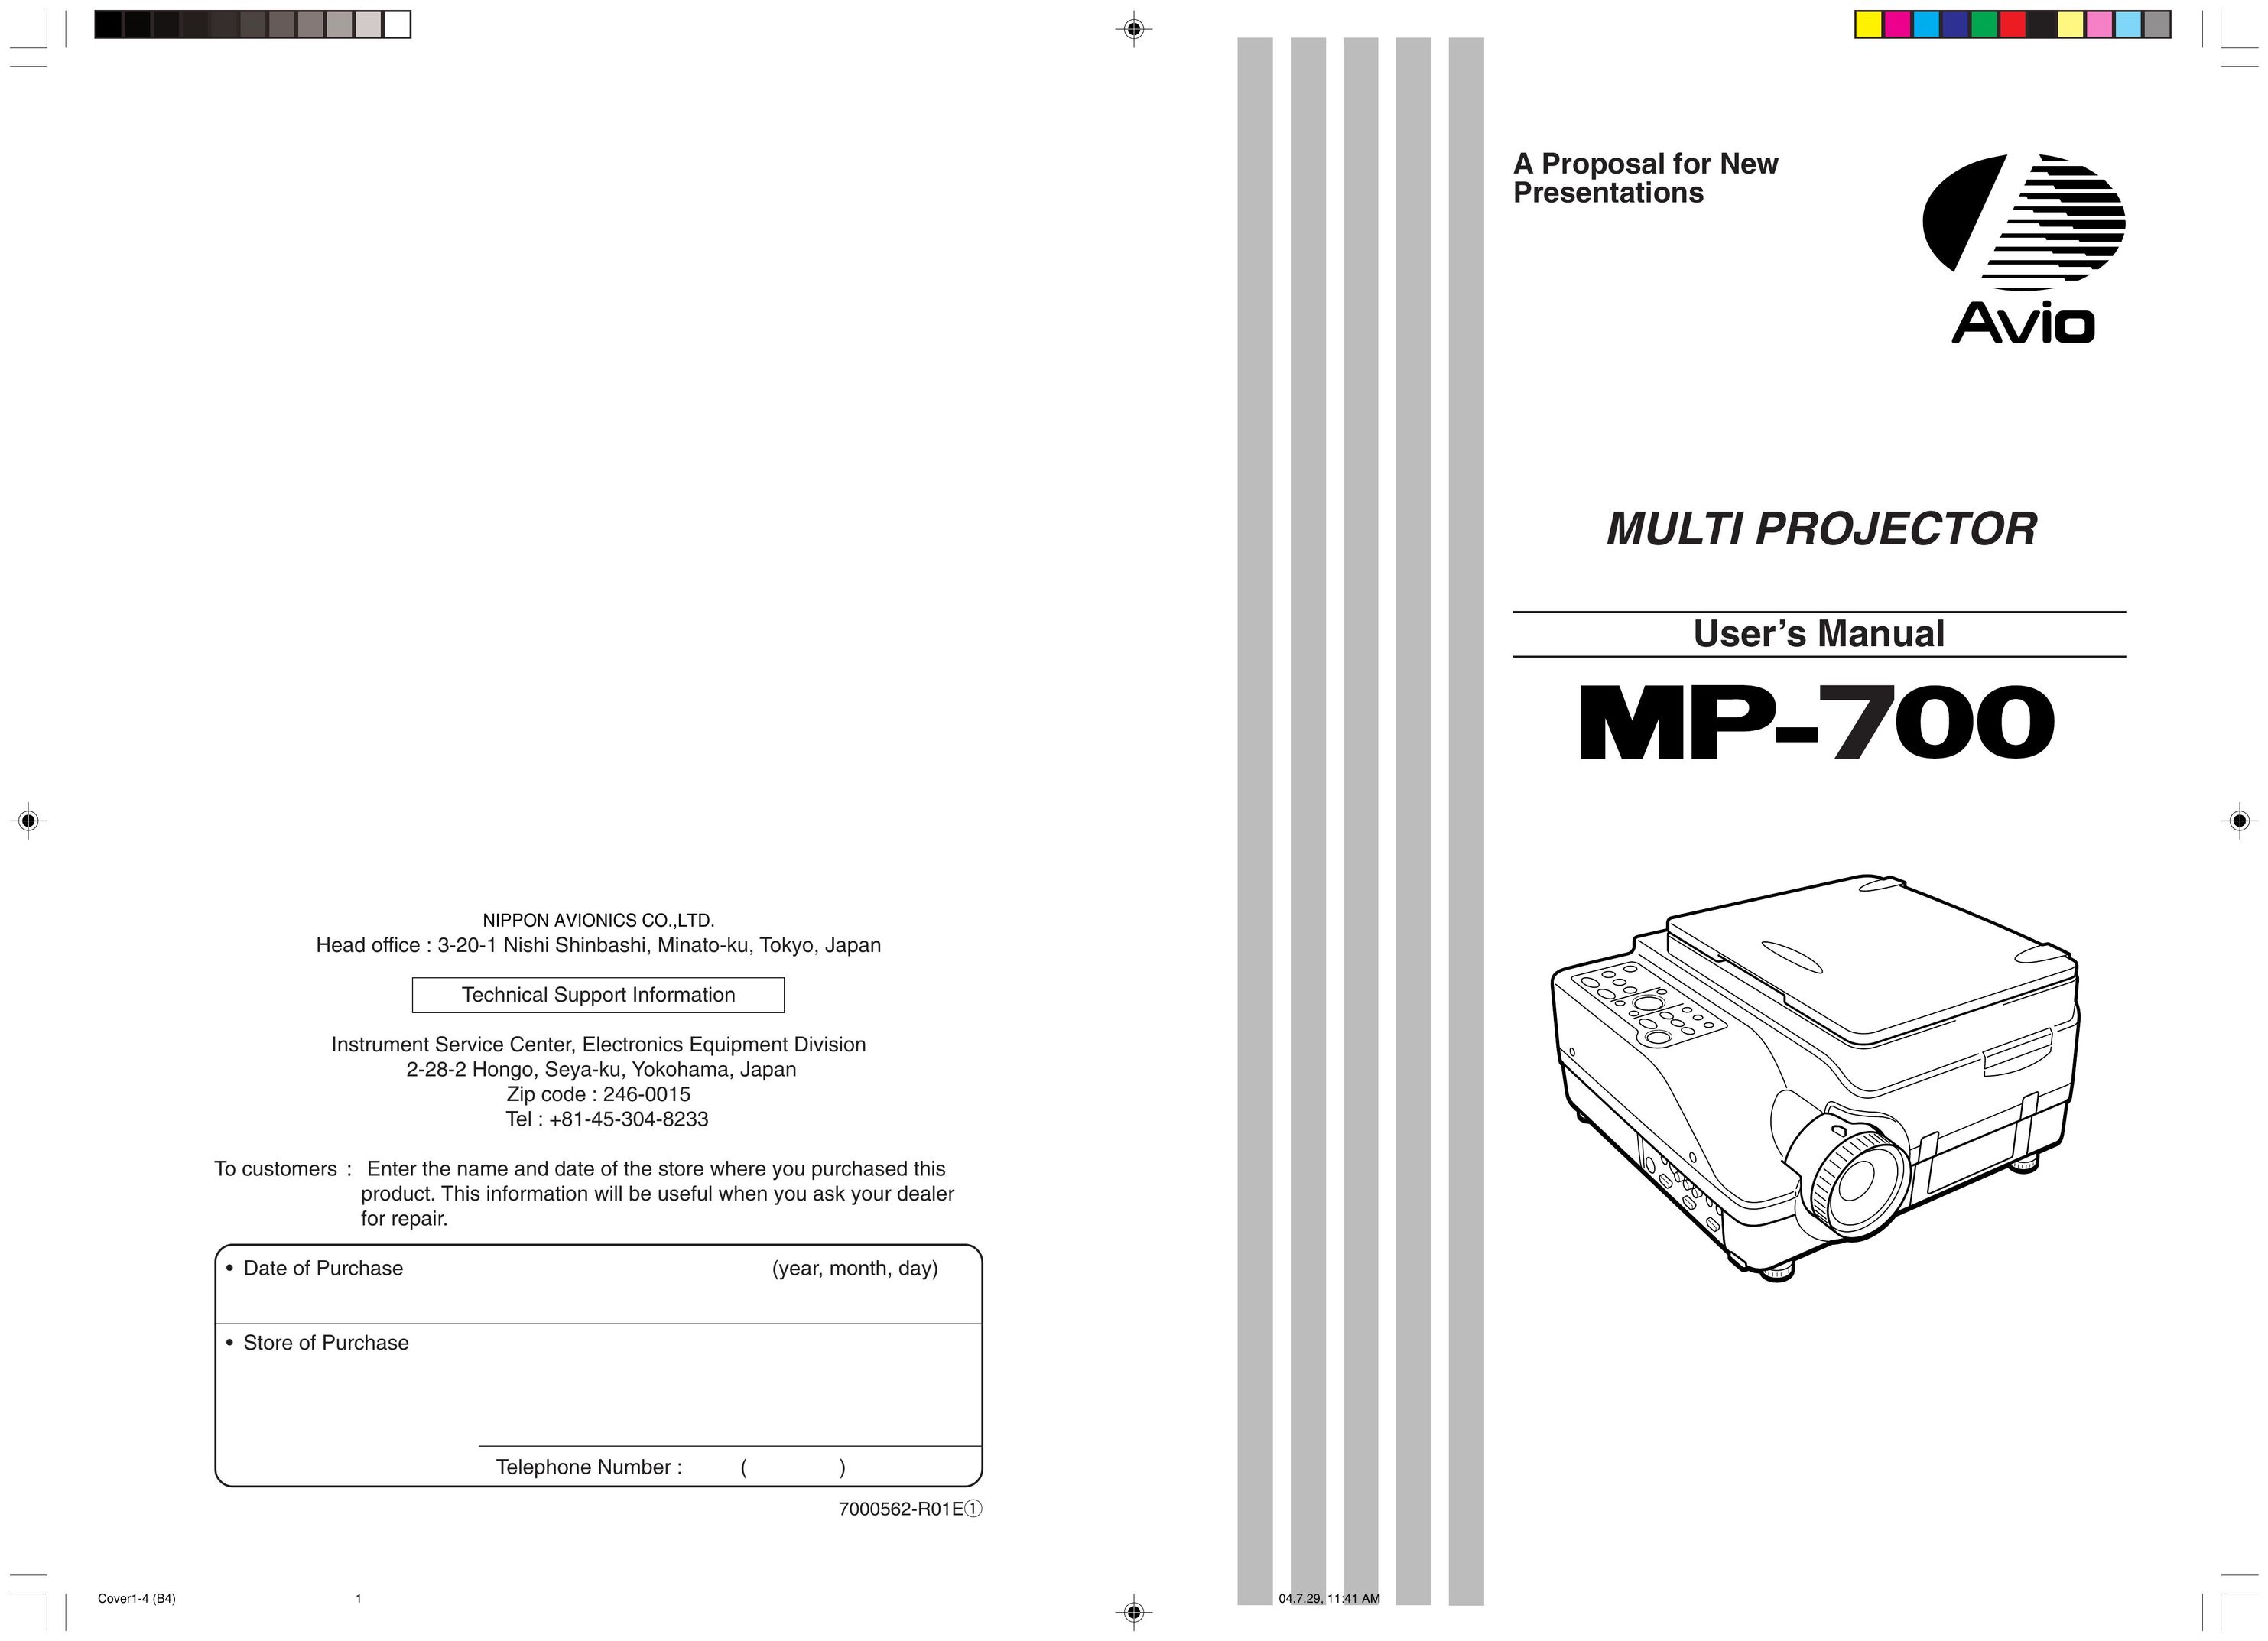 Kensington MP-700 Projector User Manual